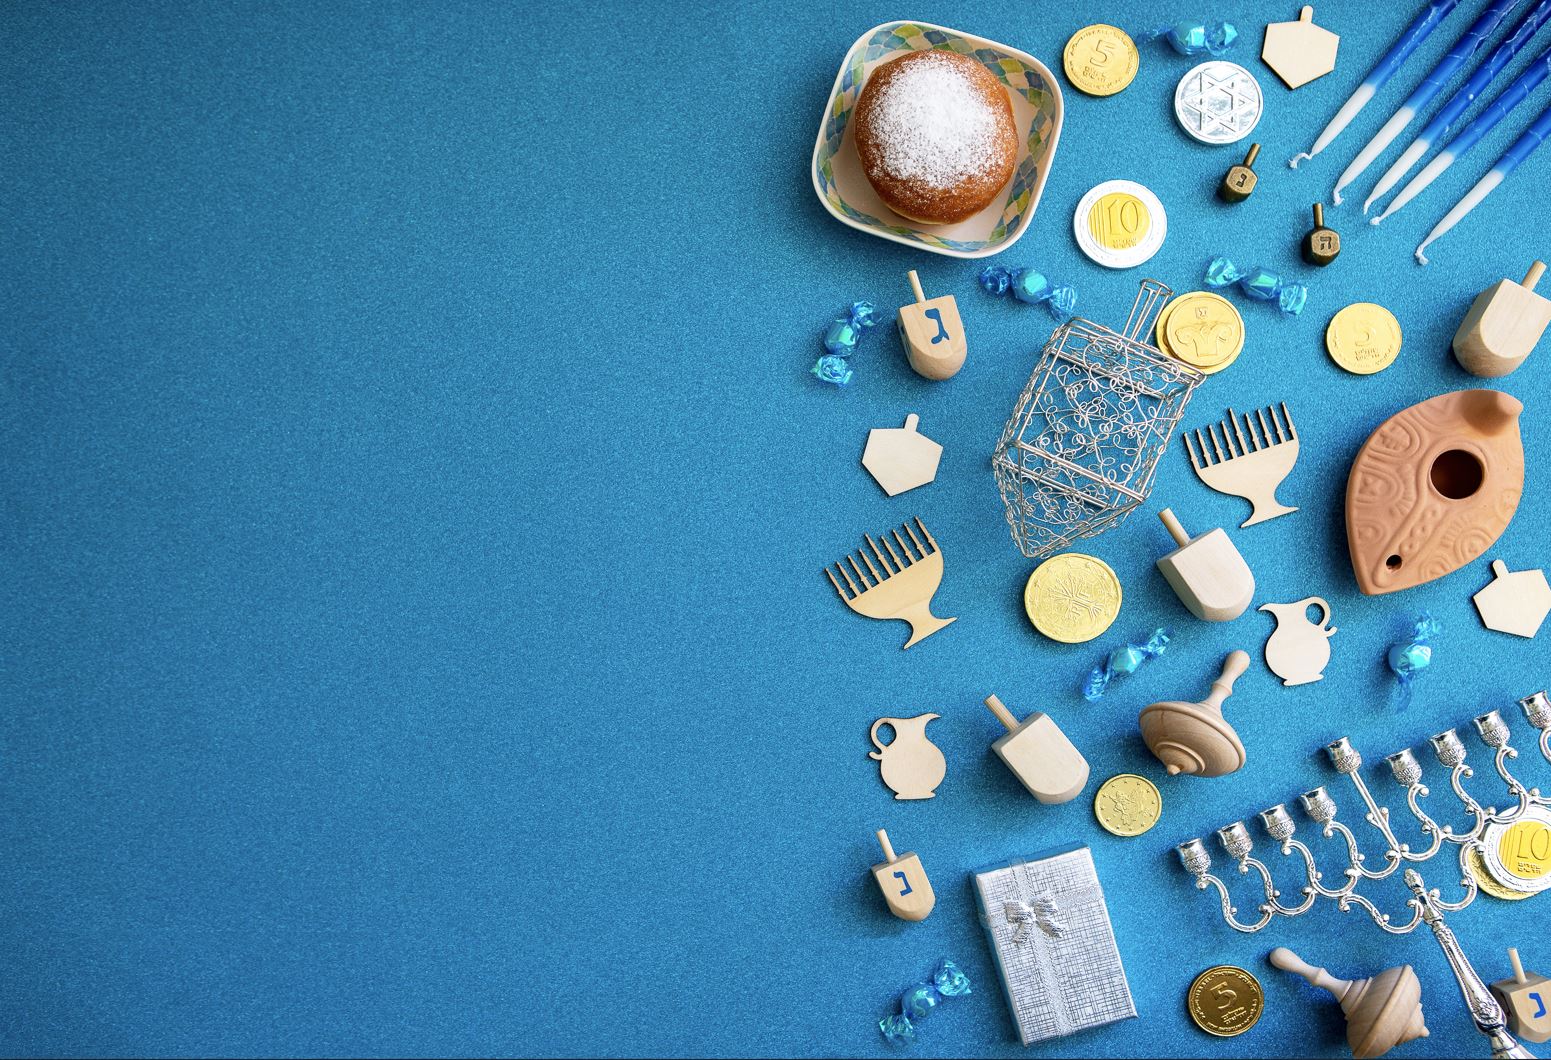 Hanukkah items on a blue background